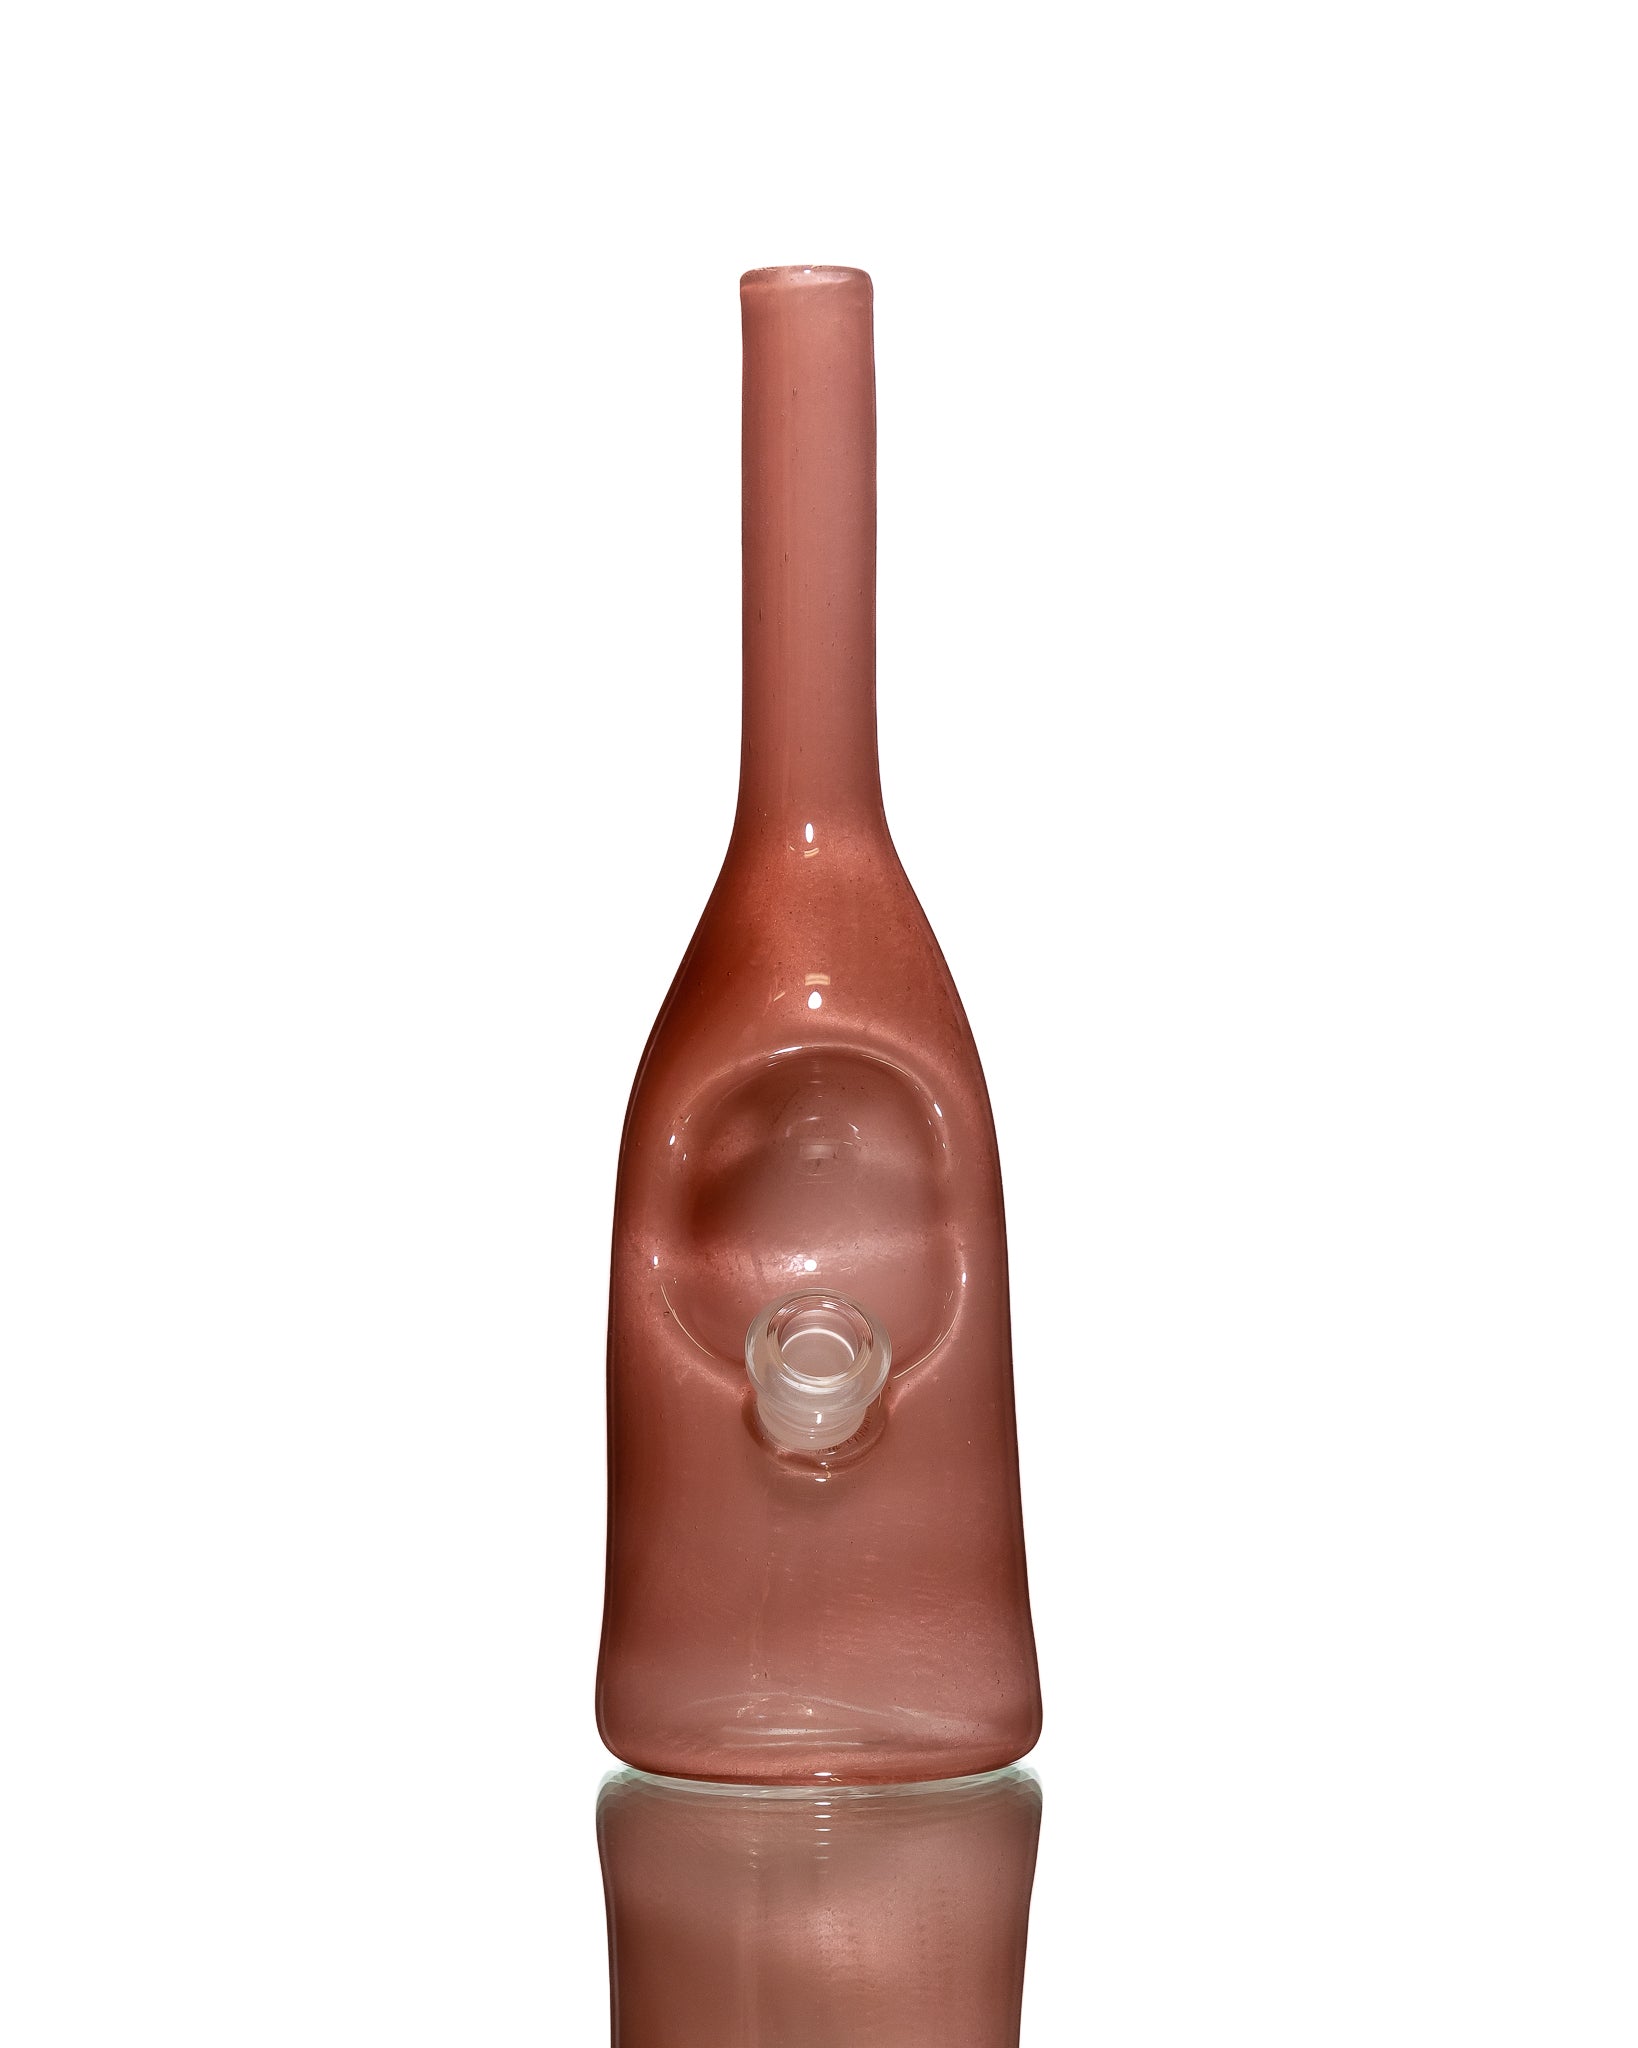 Costa Glass - Maroon Sake Bottle Rigs